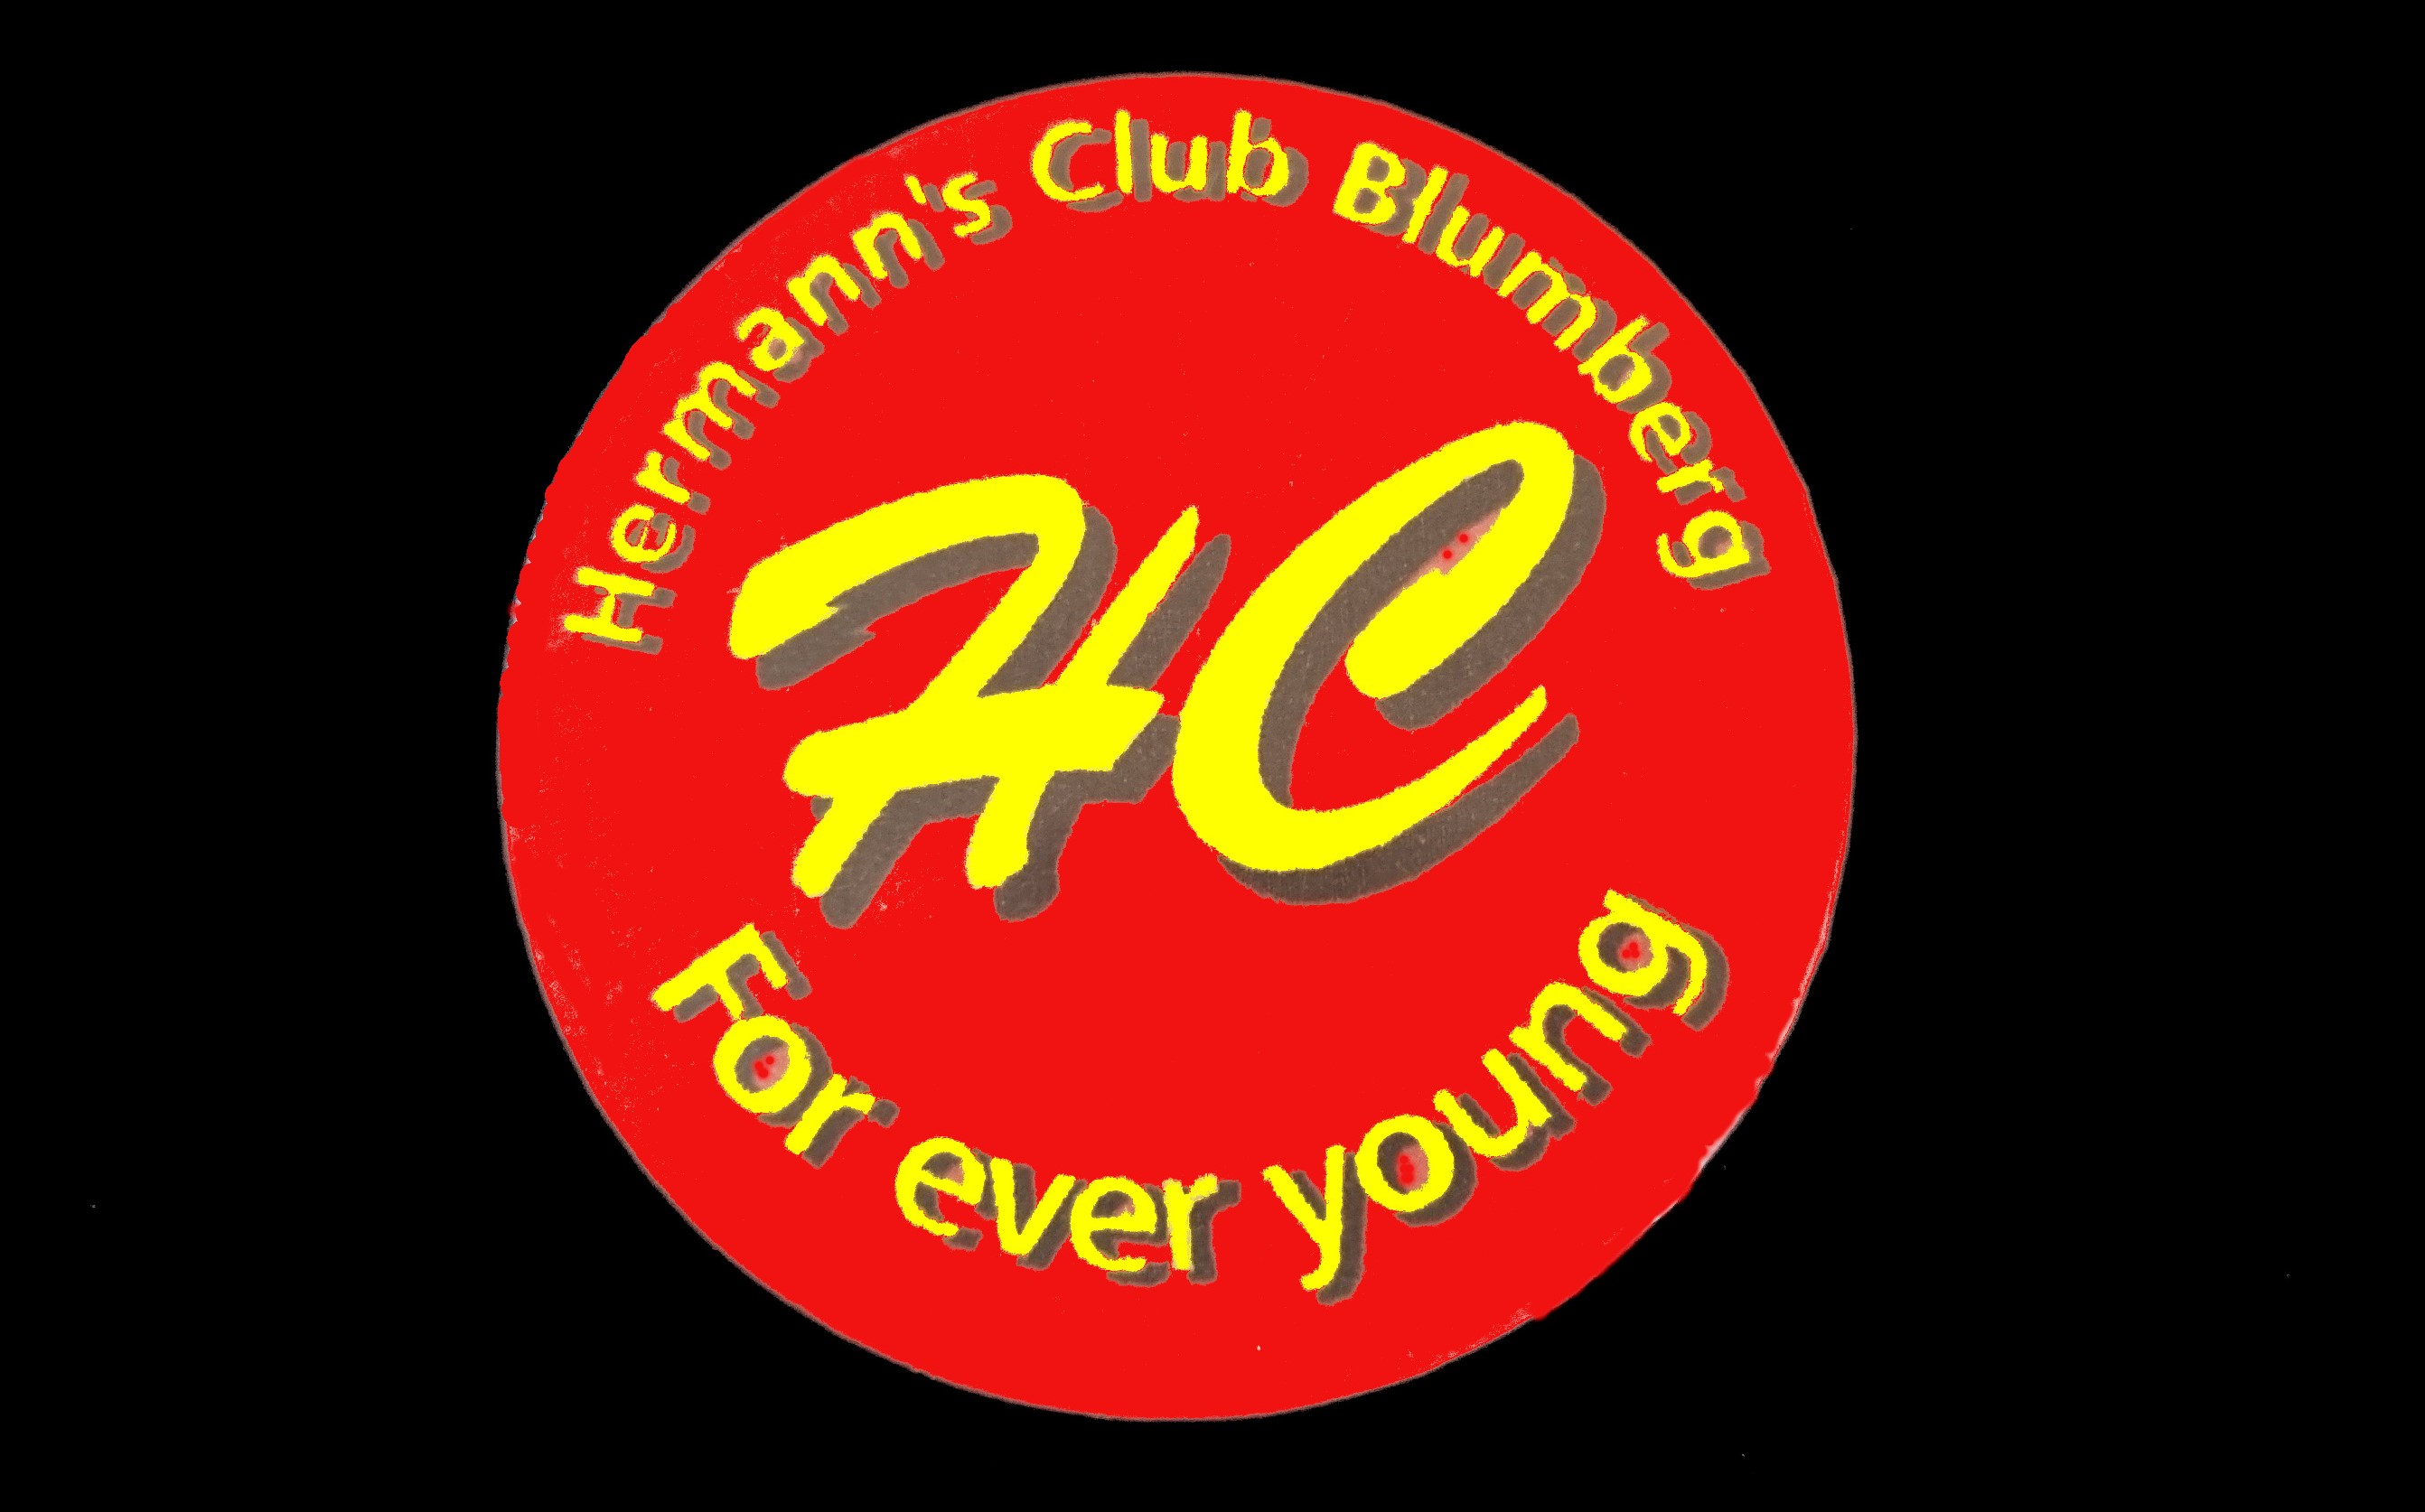 Hermann's Club Blumberg